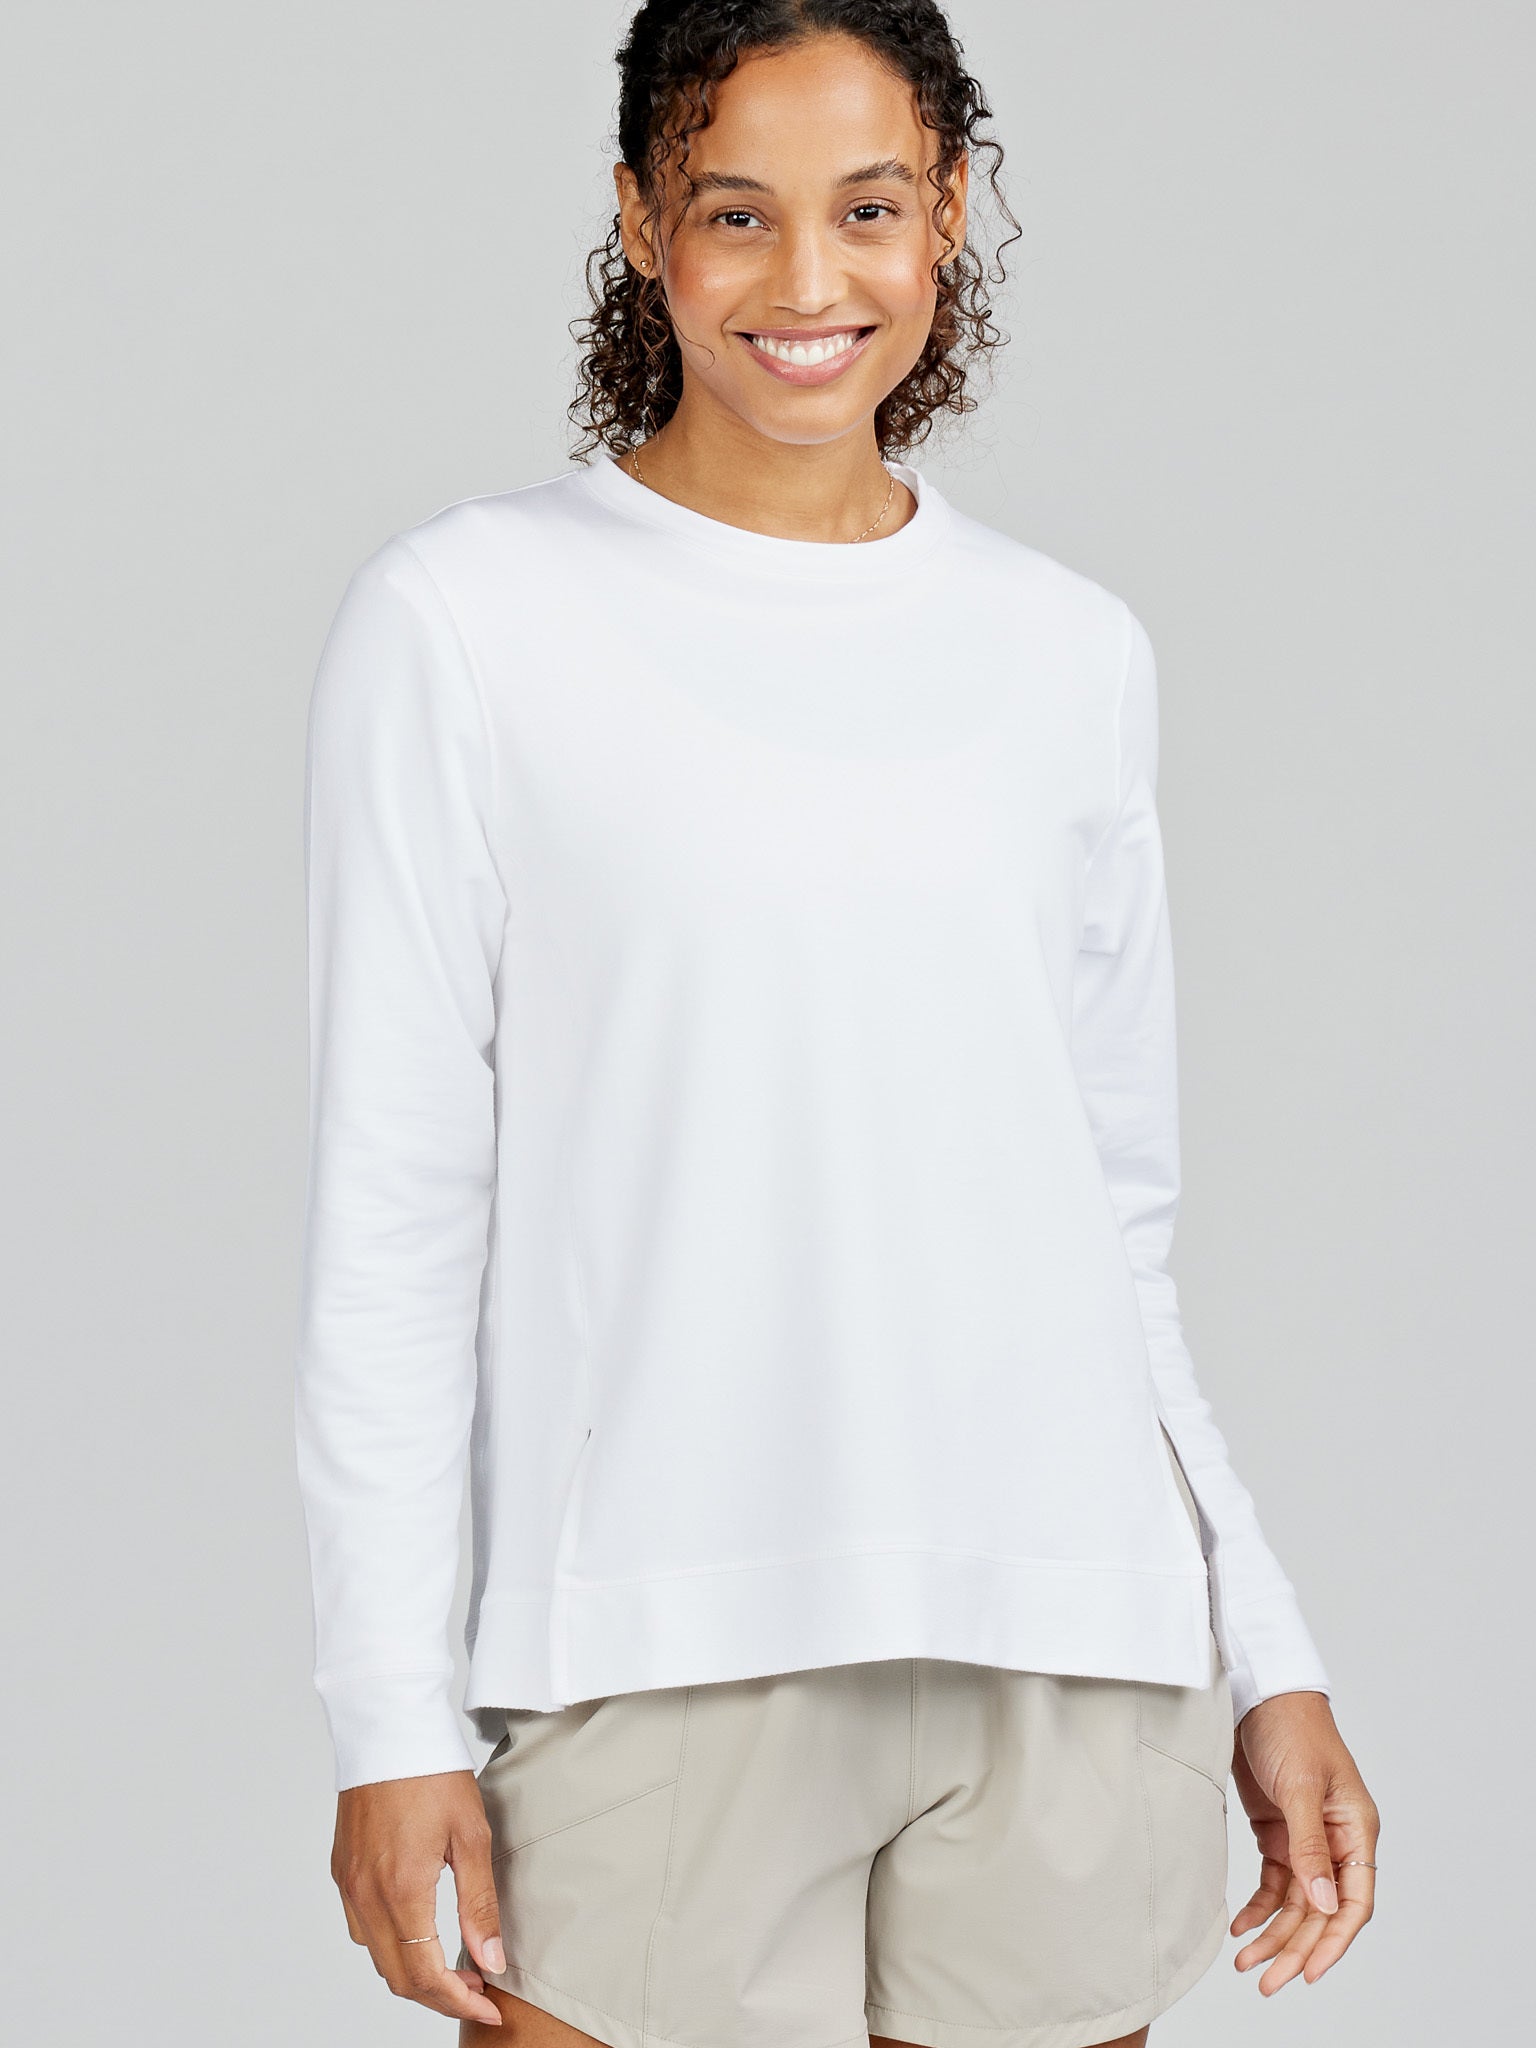 Tasc Women's Riverwalk Sweatshirt 2.0 Apparel Tasc White XSmall 